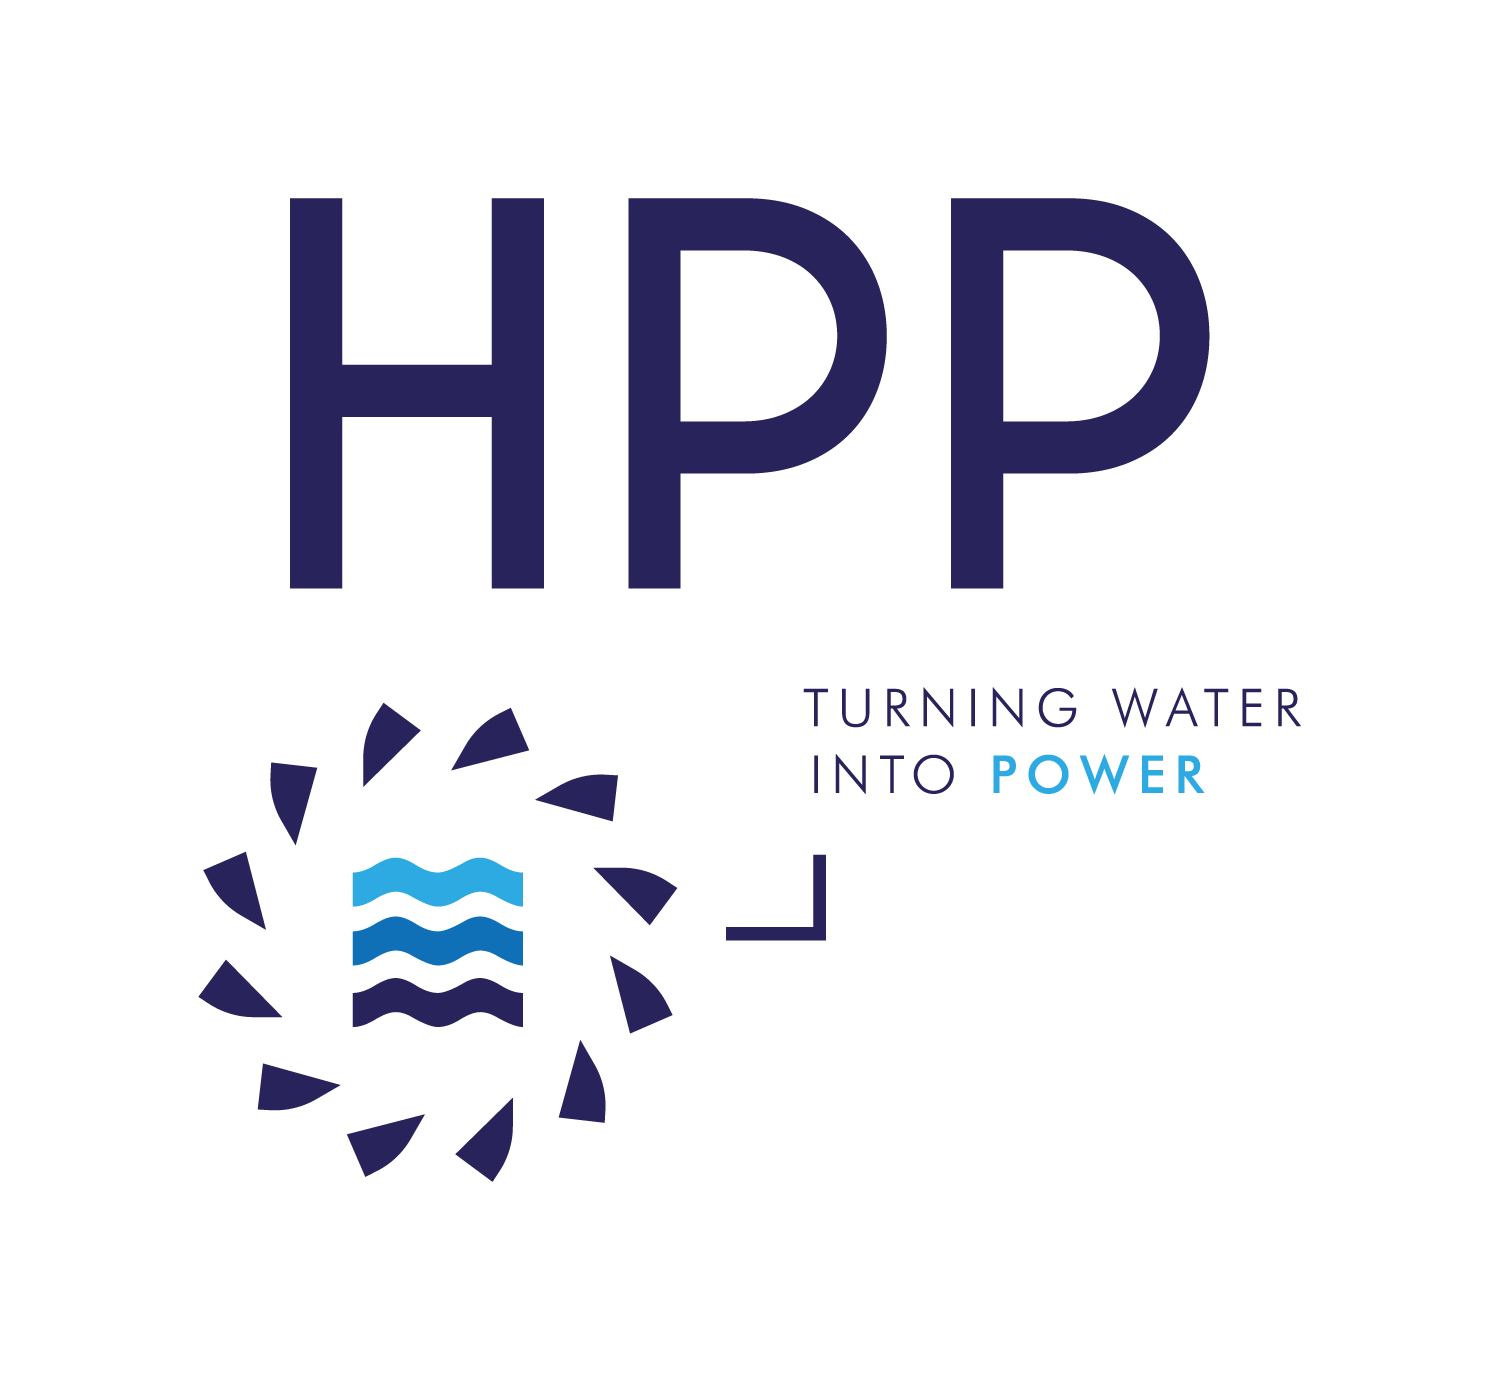 Hydro Power Plant – HPP